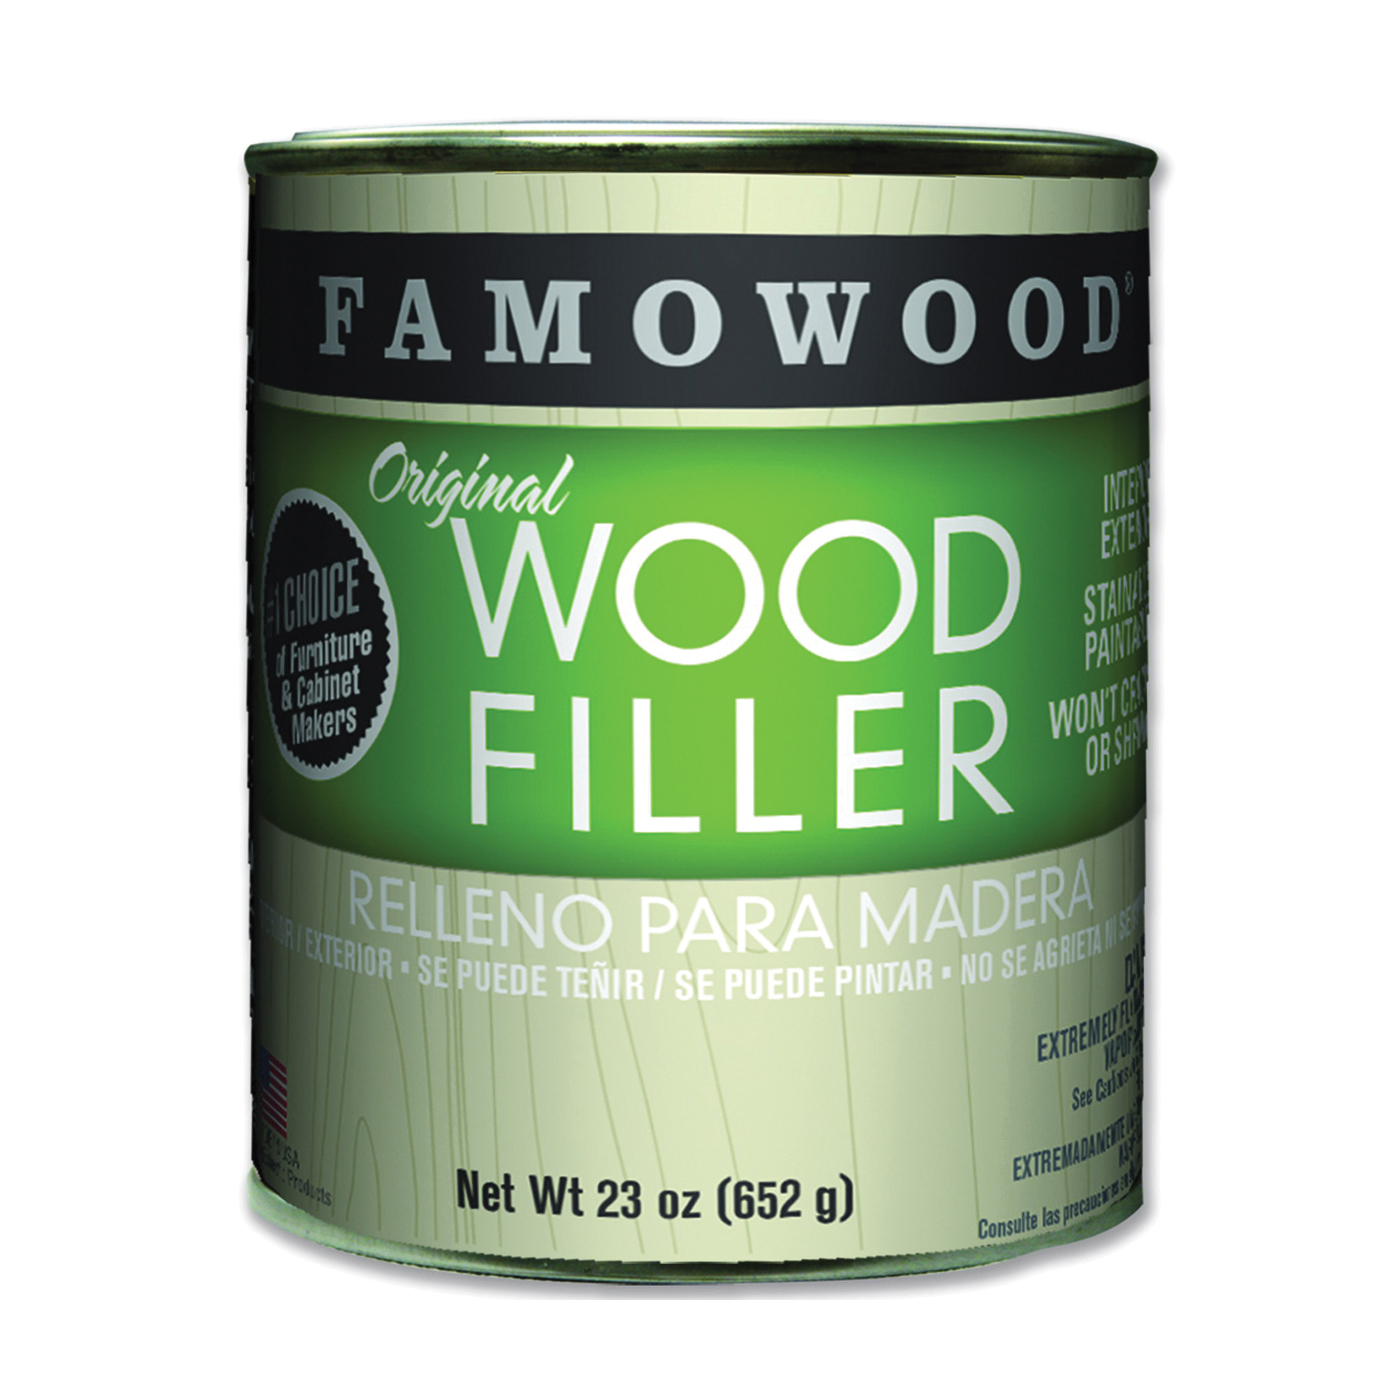 36021142 Original Wood Filler, Liquid, Paste, Walnut, 24 oz, Can